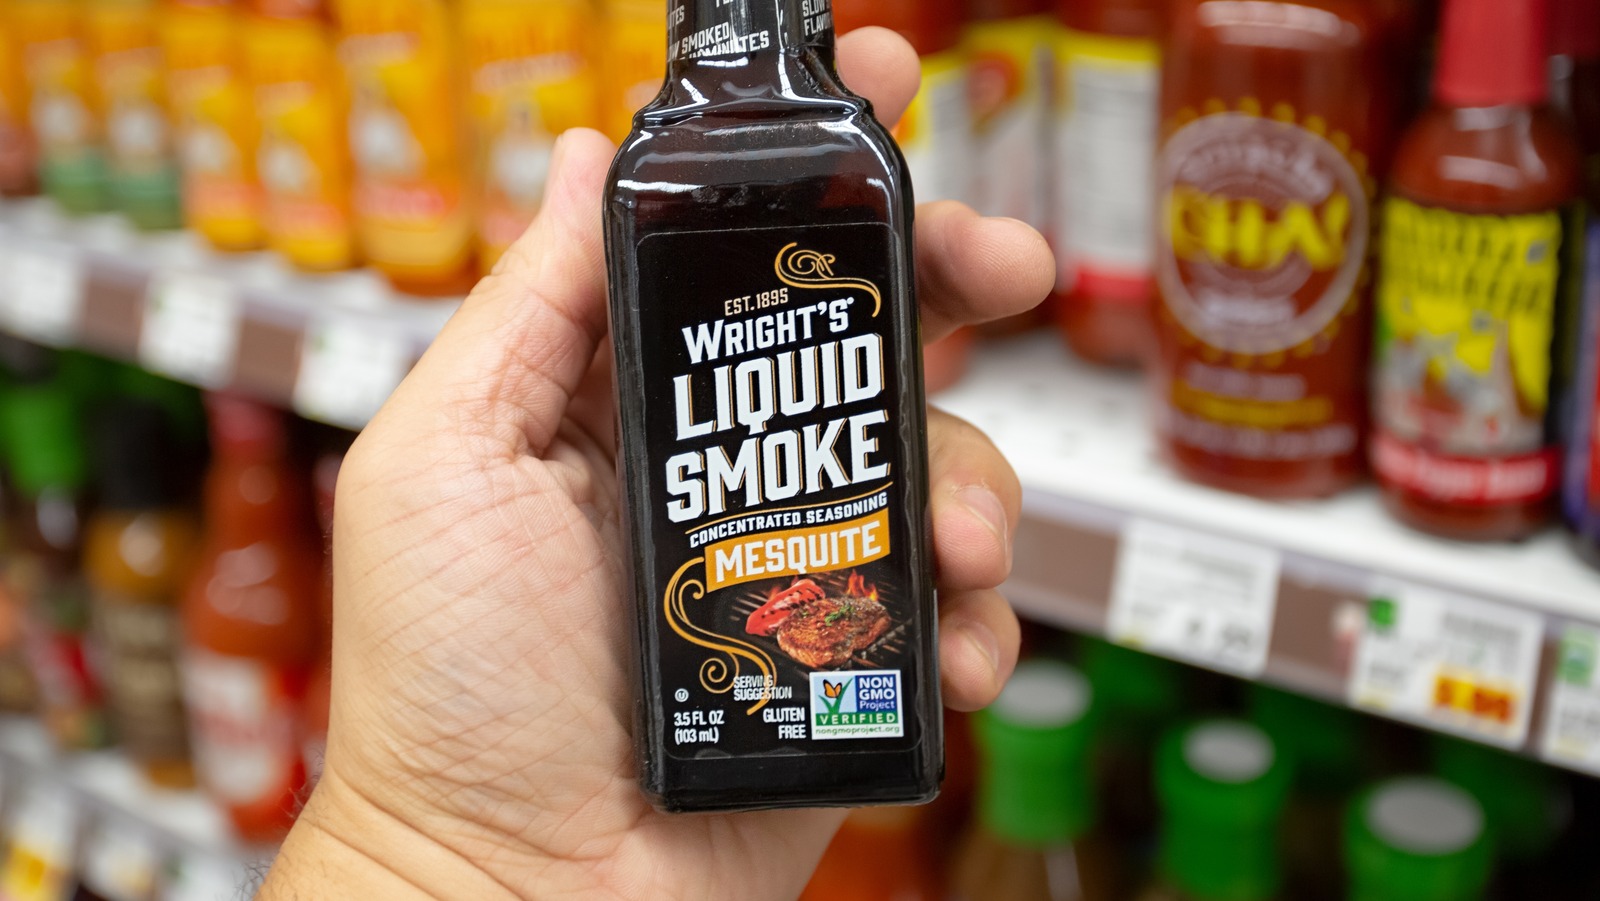 Wright's Liquid Smoke Hickory Seasoning - 3.5 oz btl